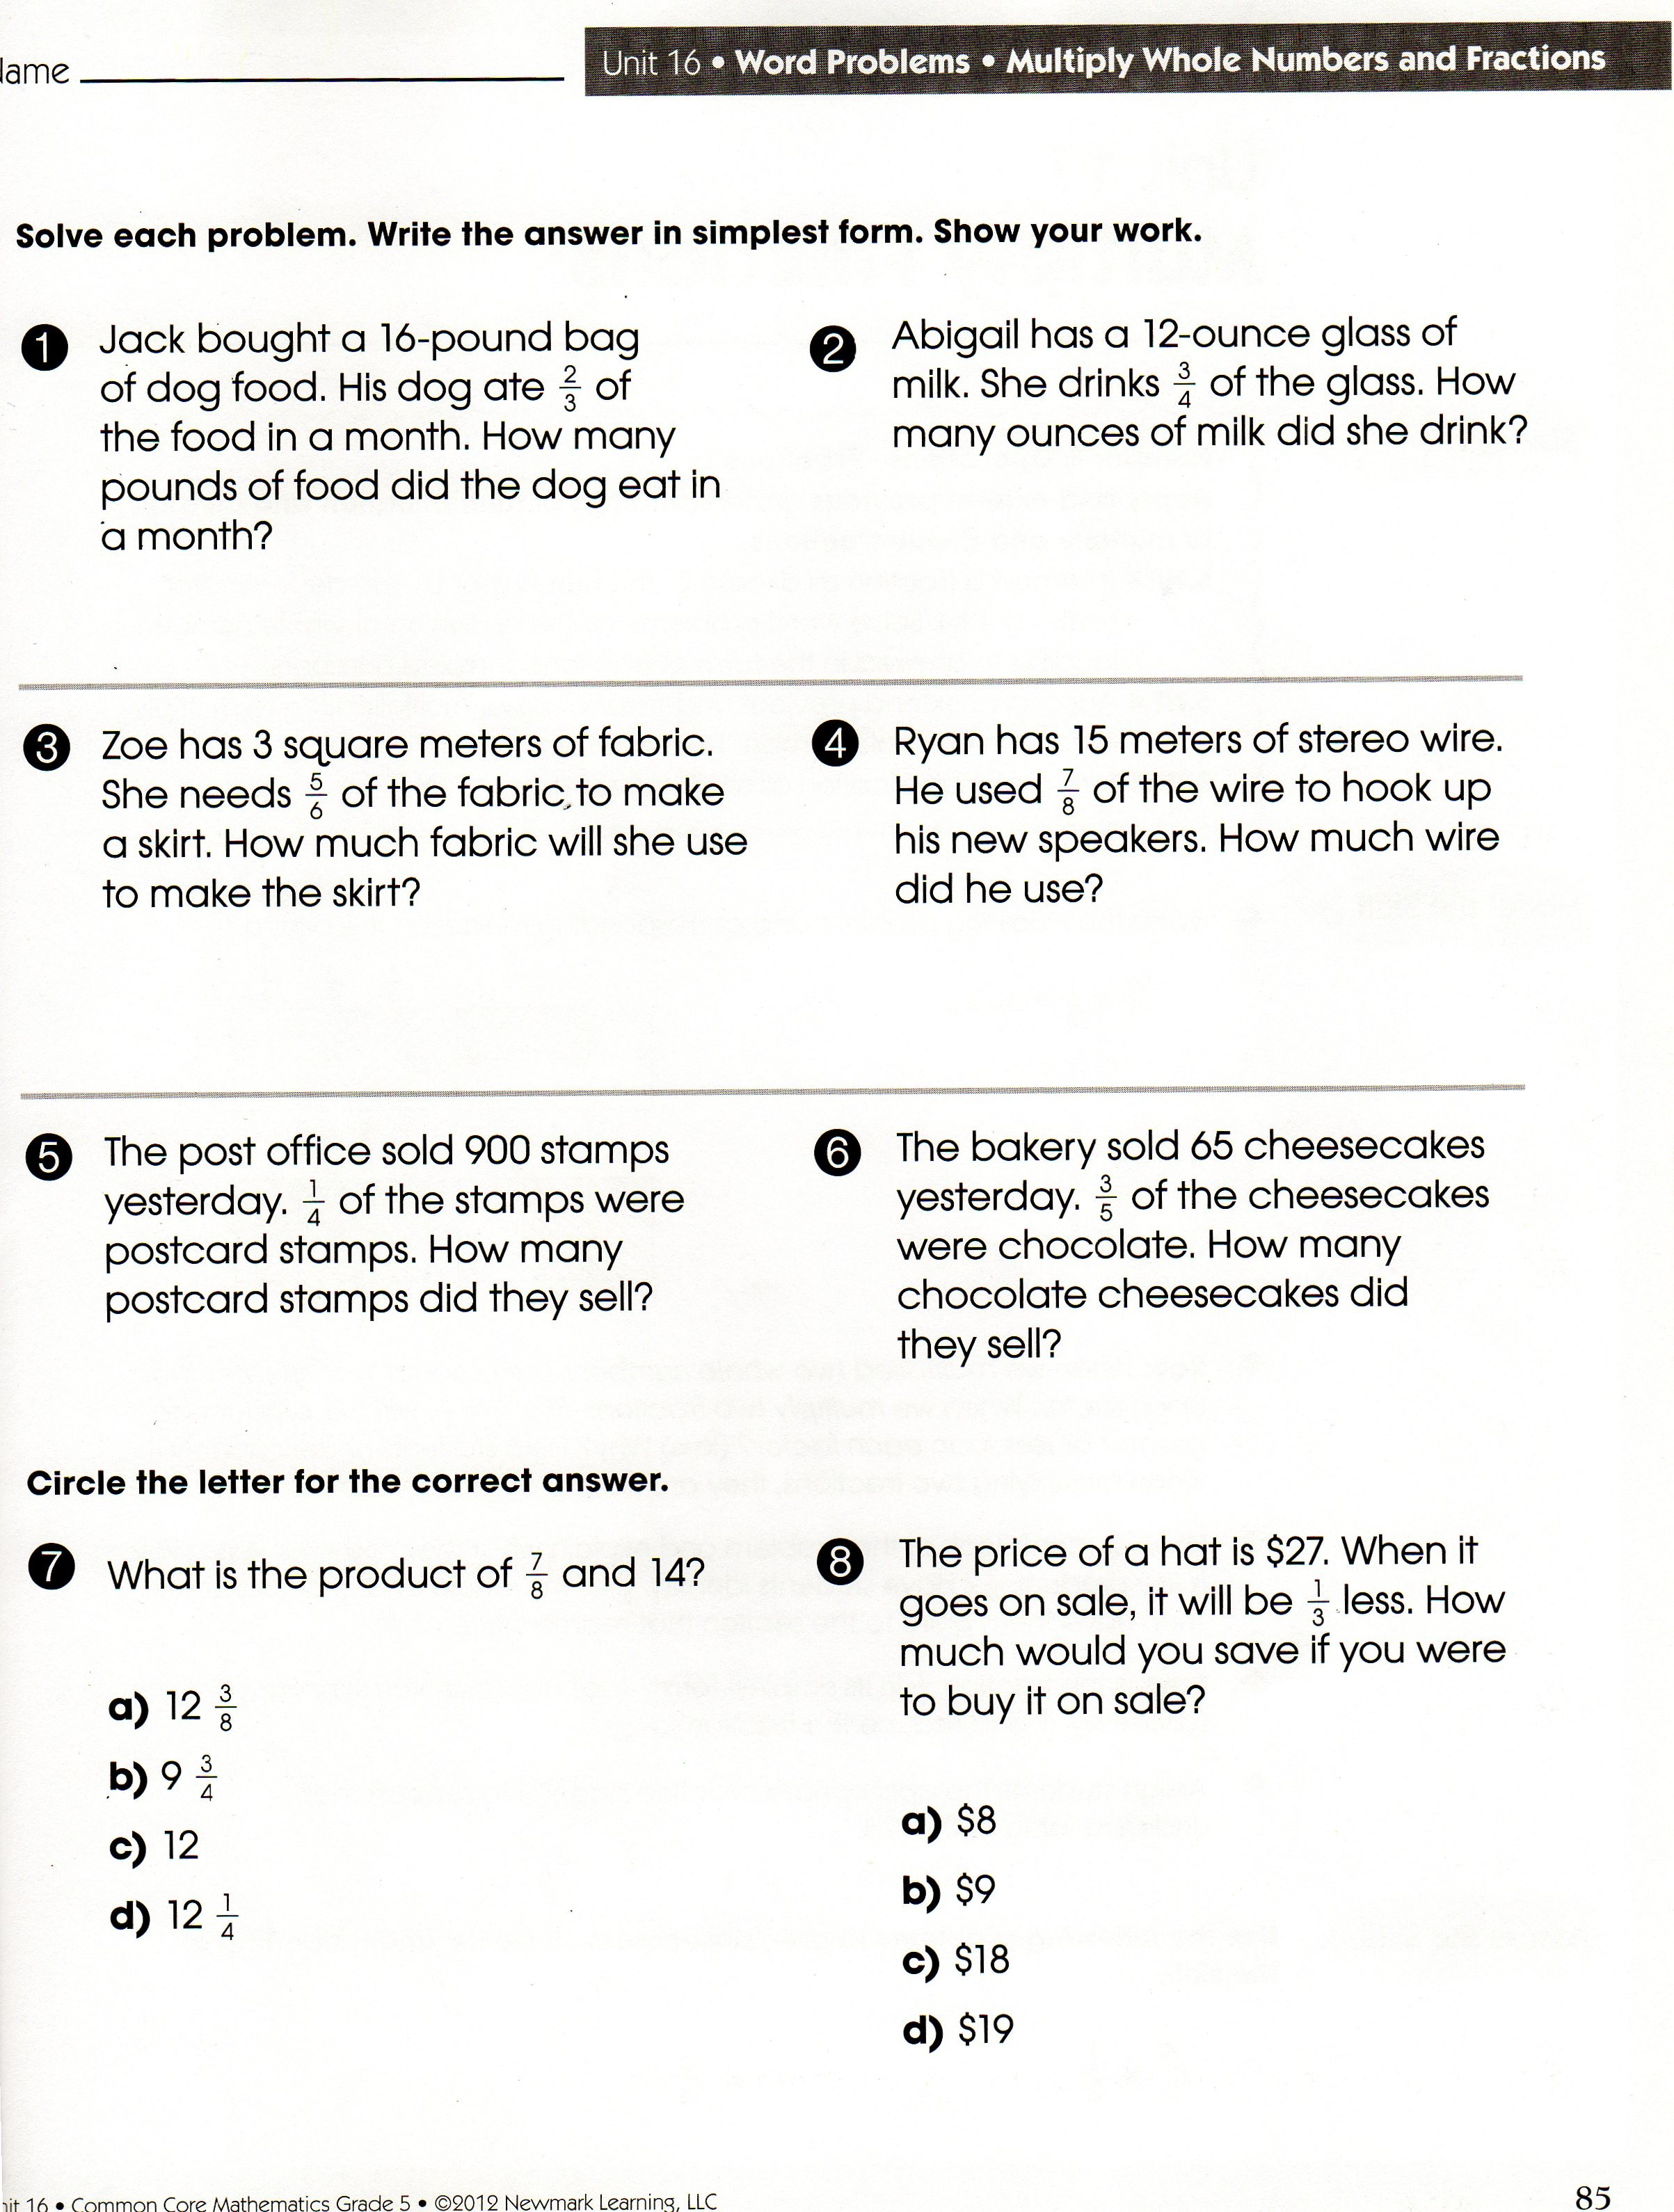 Algebra Word Problems Worksheet Pdf High School Financial Math Worksheets Algebra Word